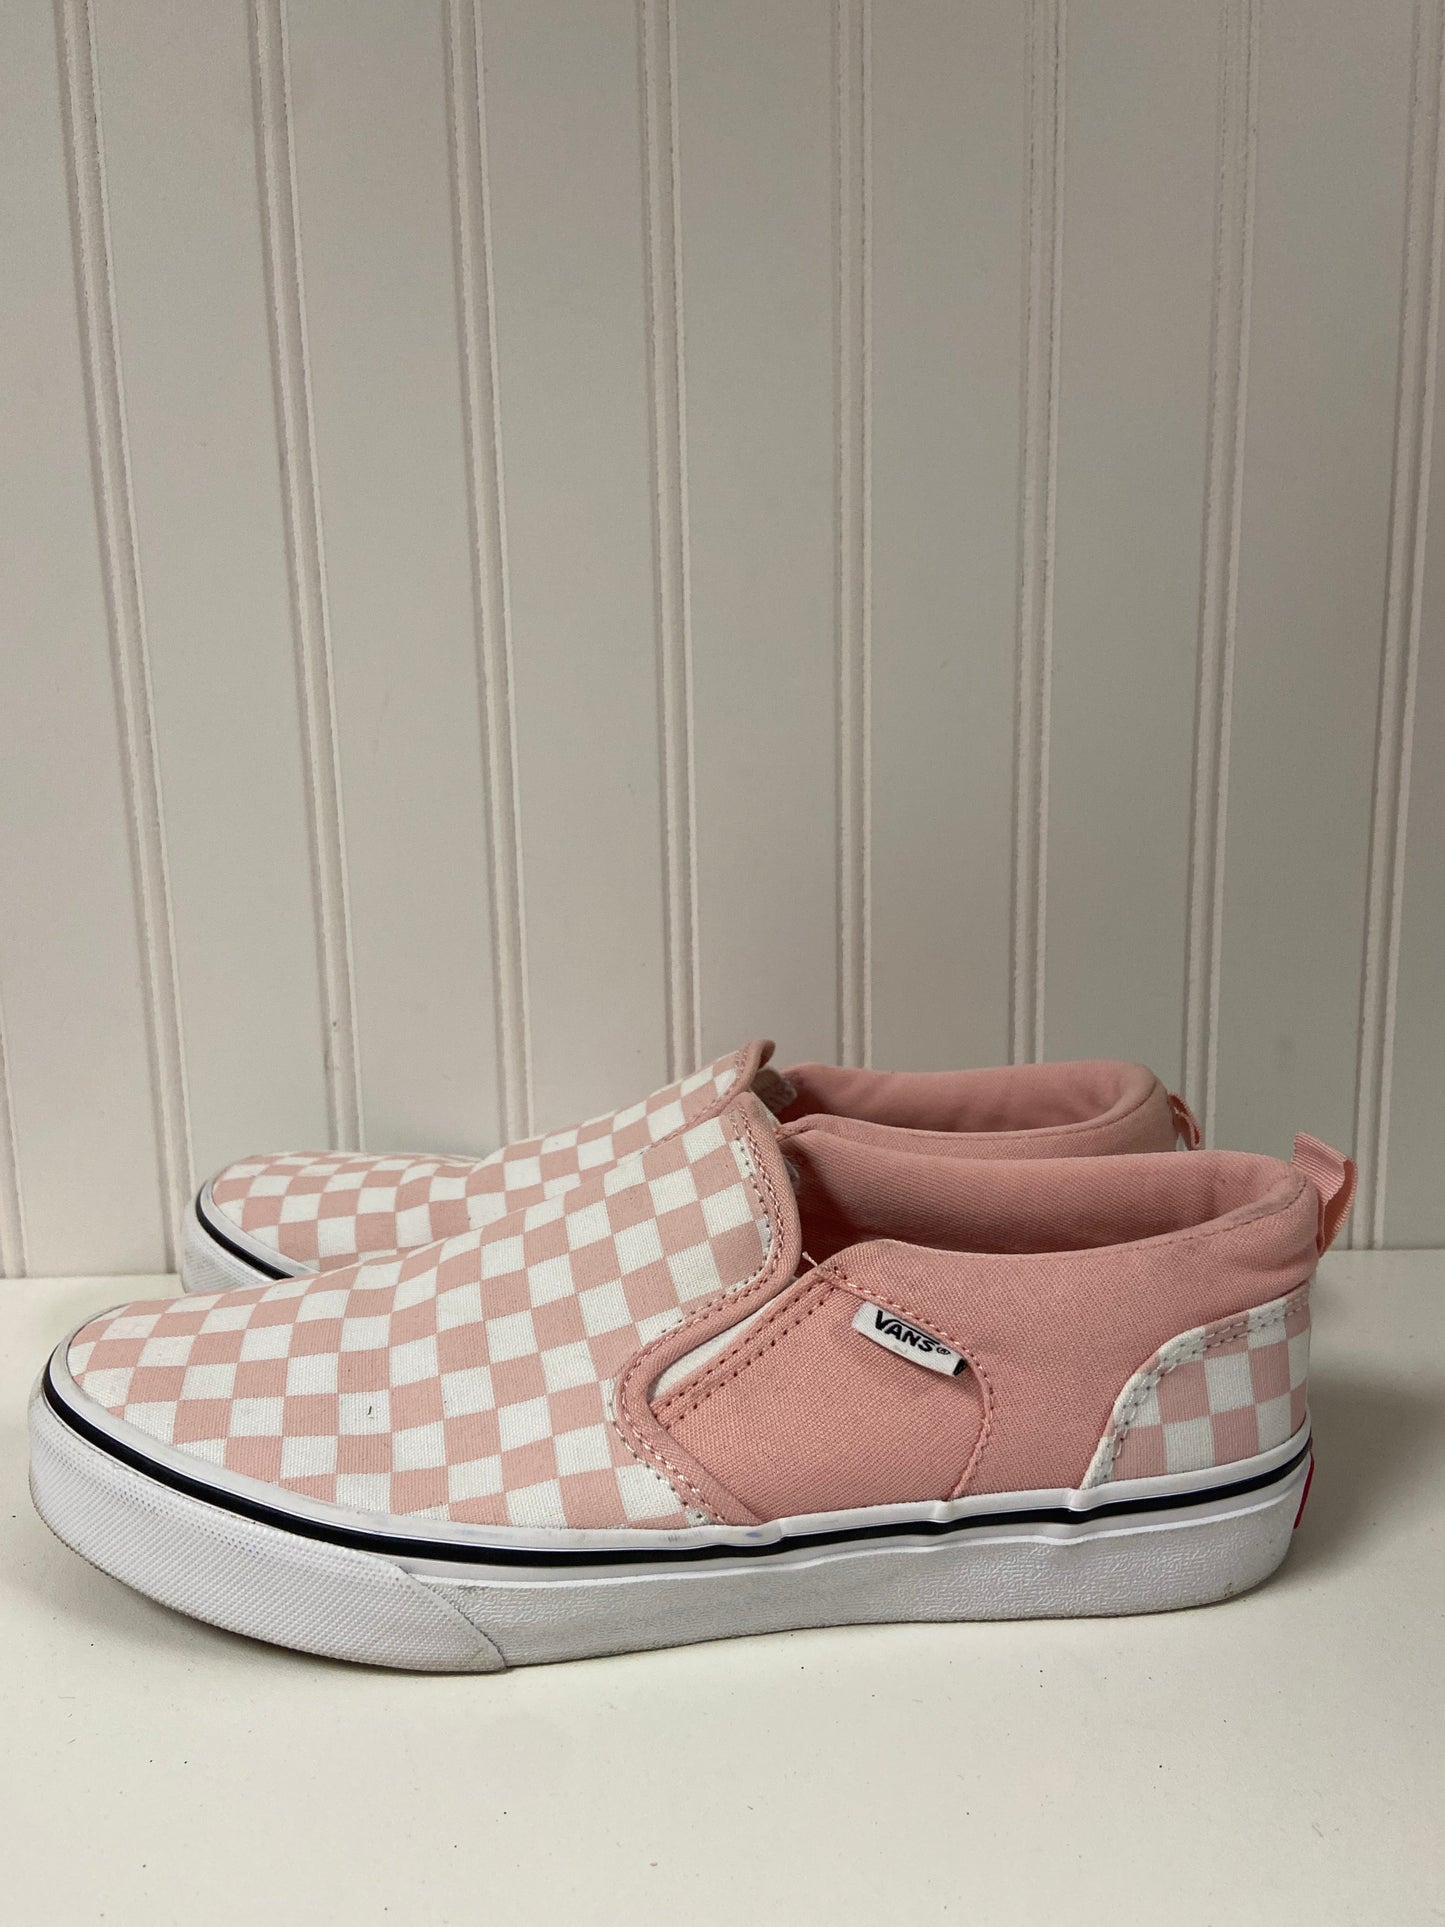 Pink & White Shoes Flats Vans, Size 8